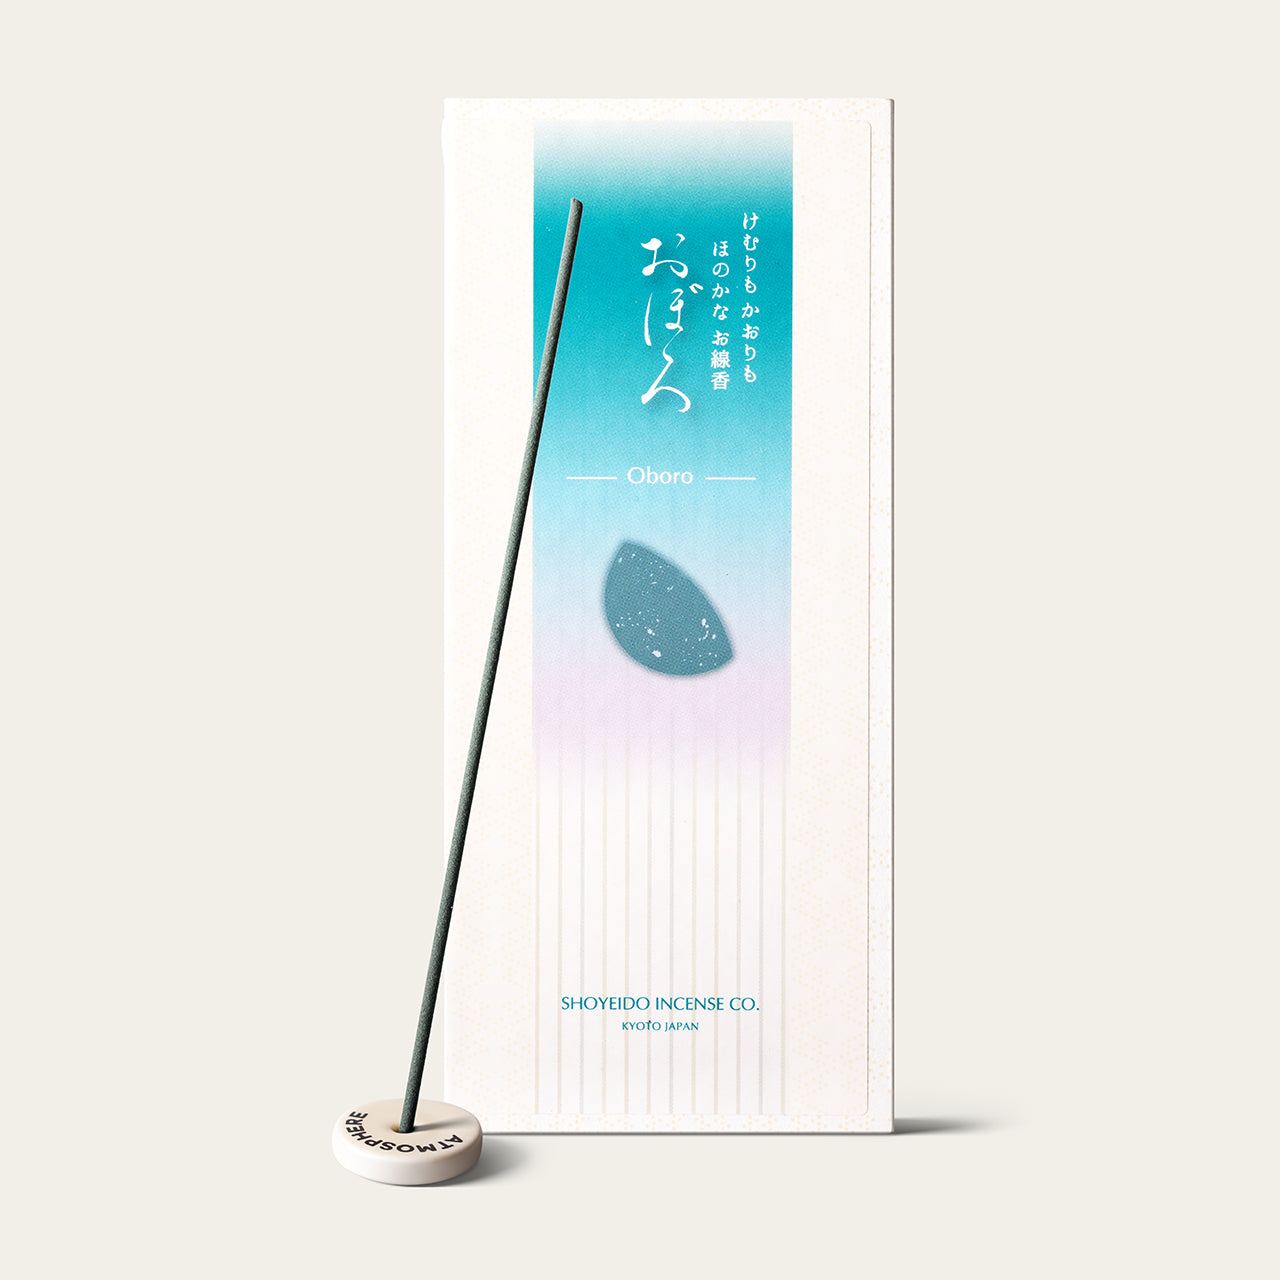 Shoyeido Low Smoke Illusions Oboro Japanese incense sticks (165 sticks) with Atmosphere ceramic incense holder